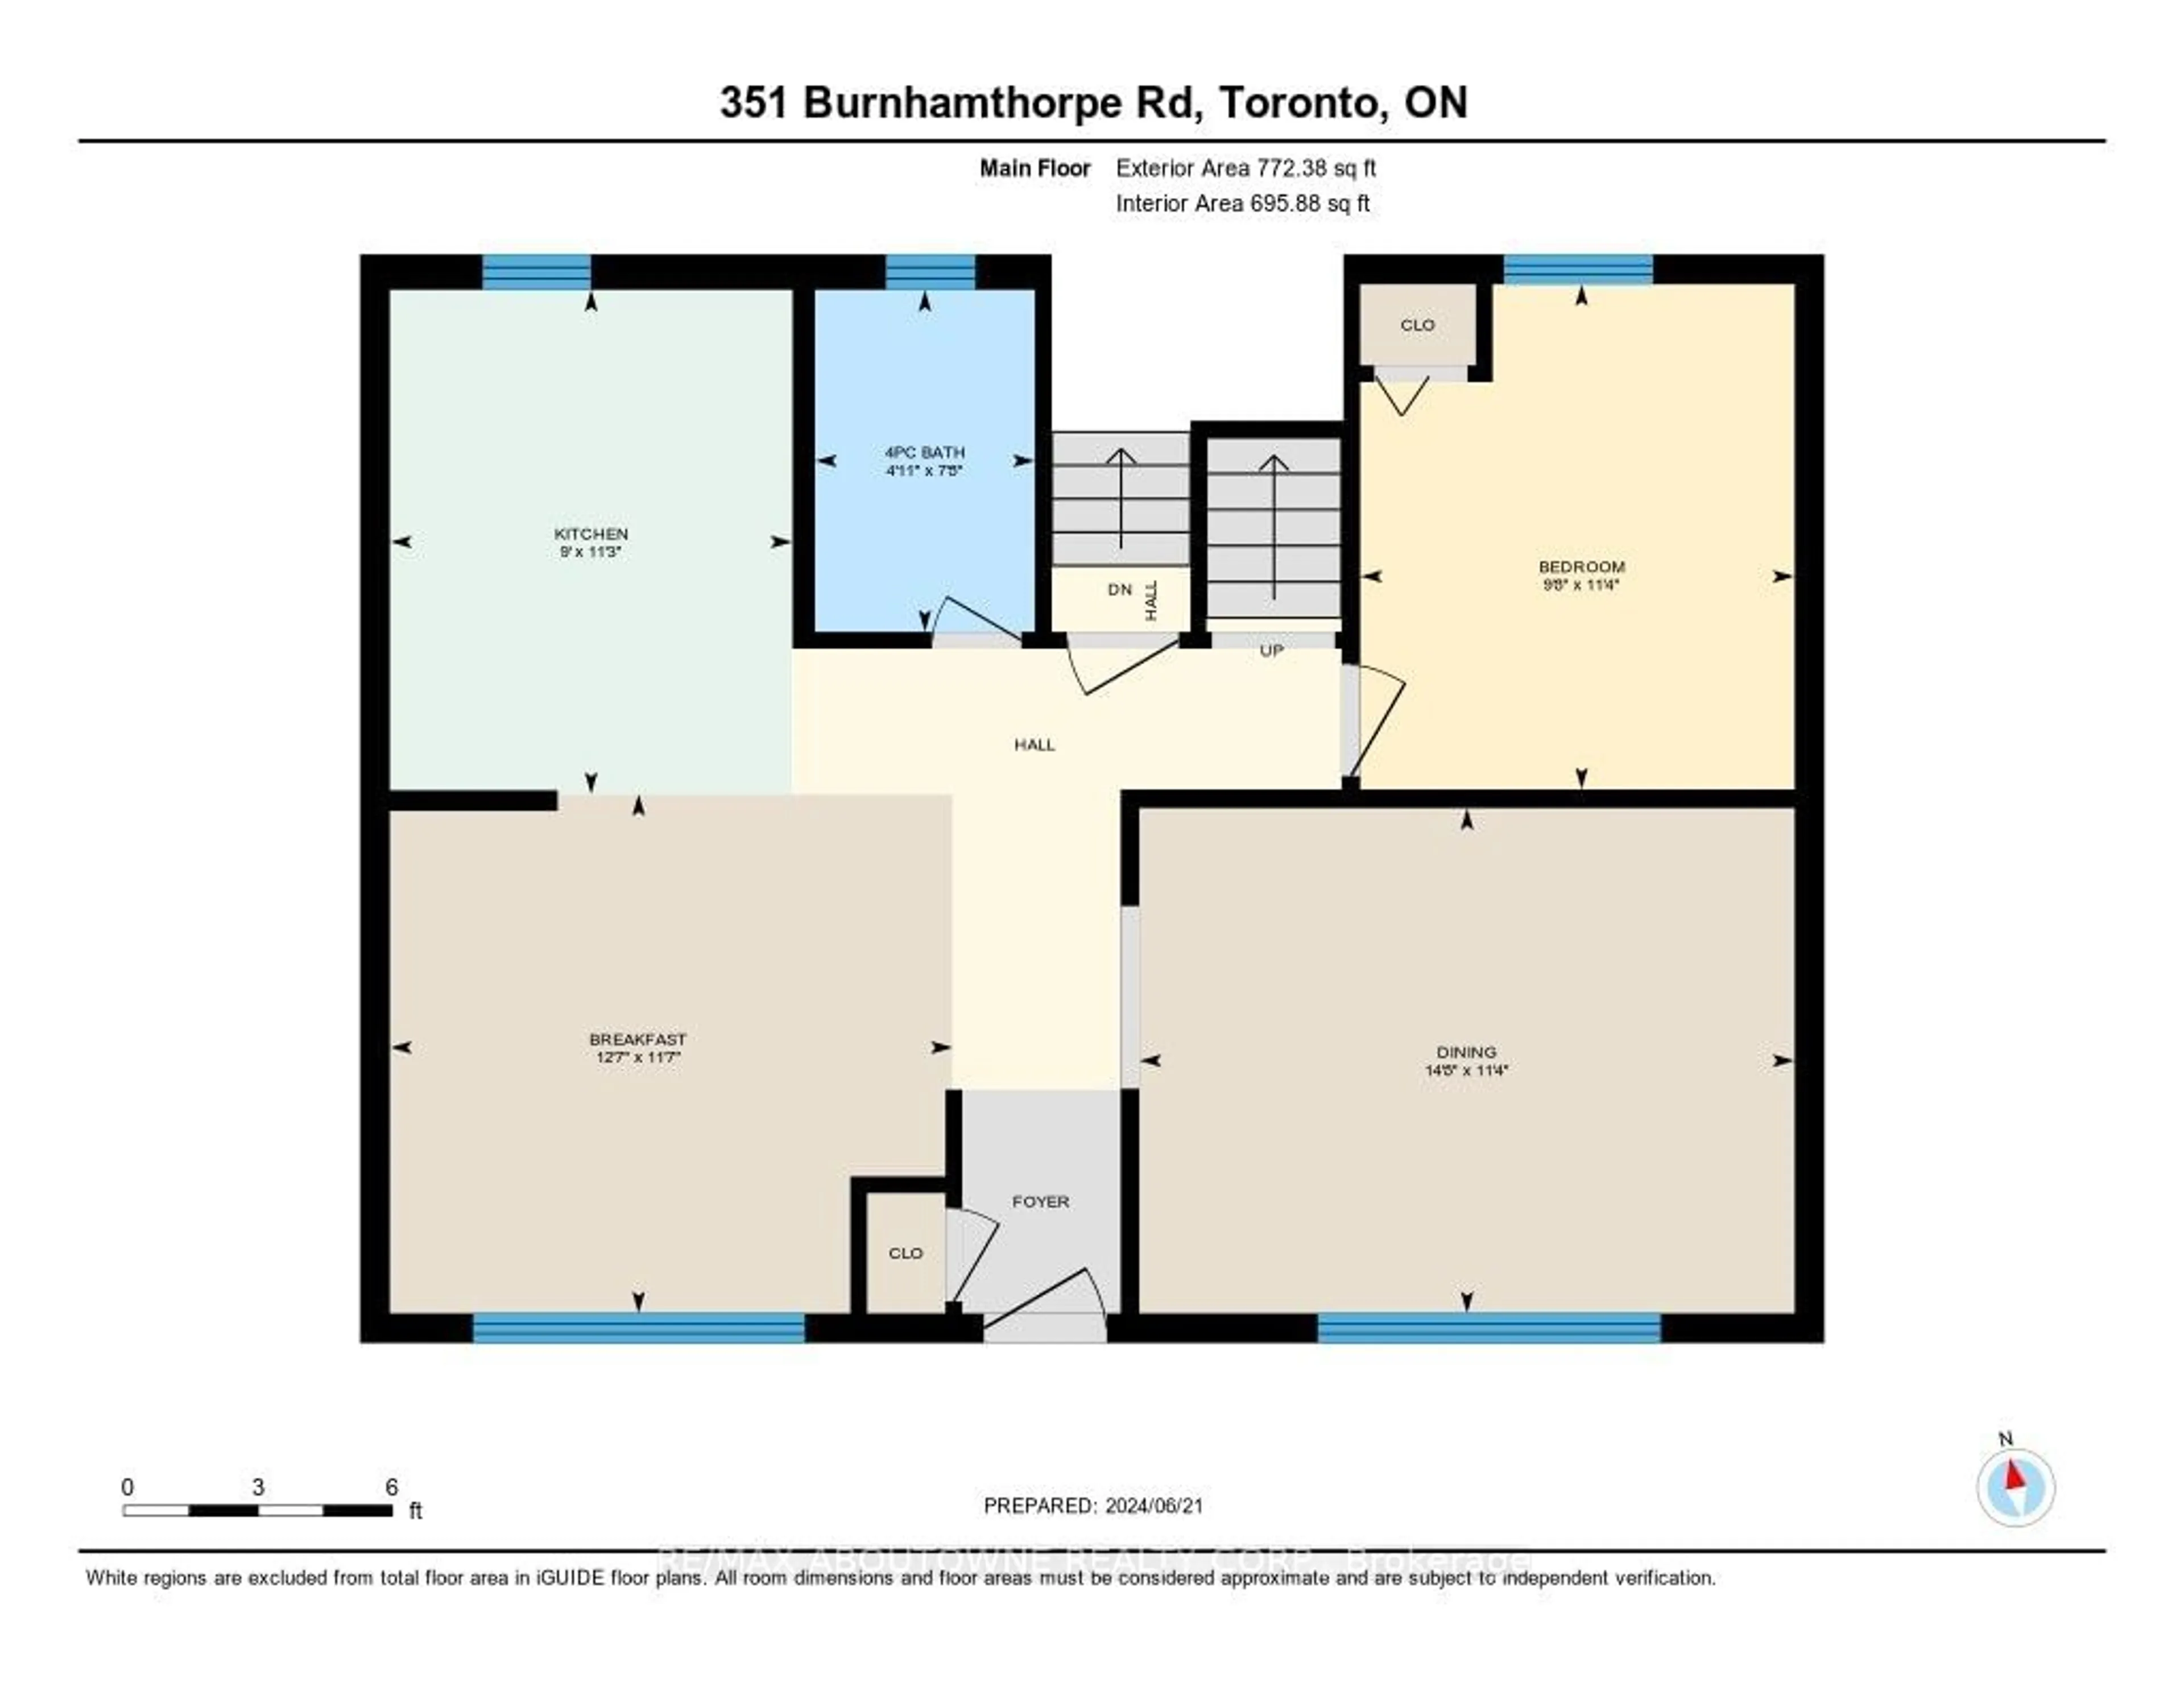 Floor plan for 351 Burnhamthorpe Rd, Toronto Ontario M9B 2A5